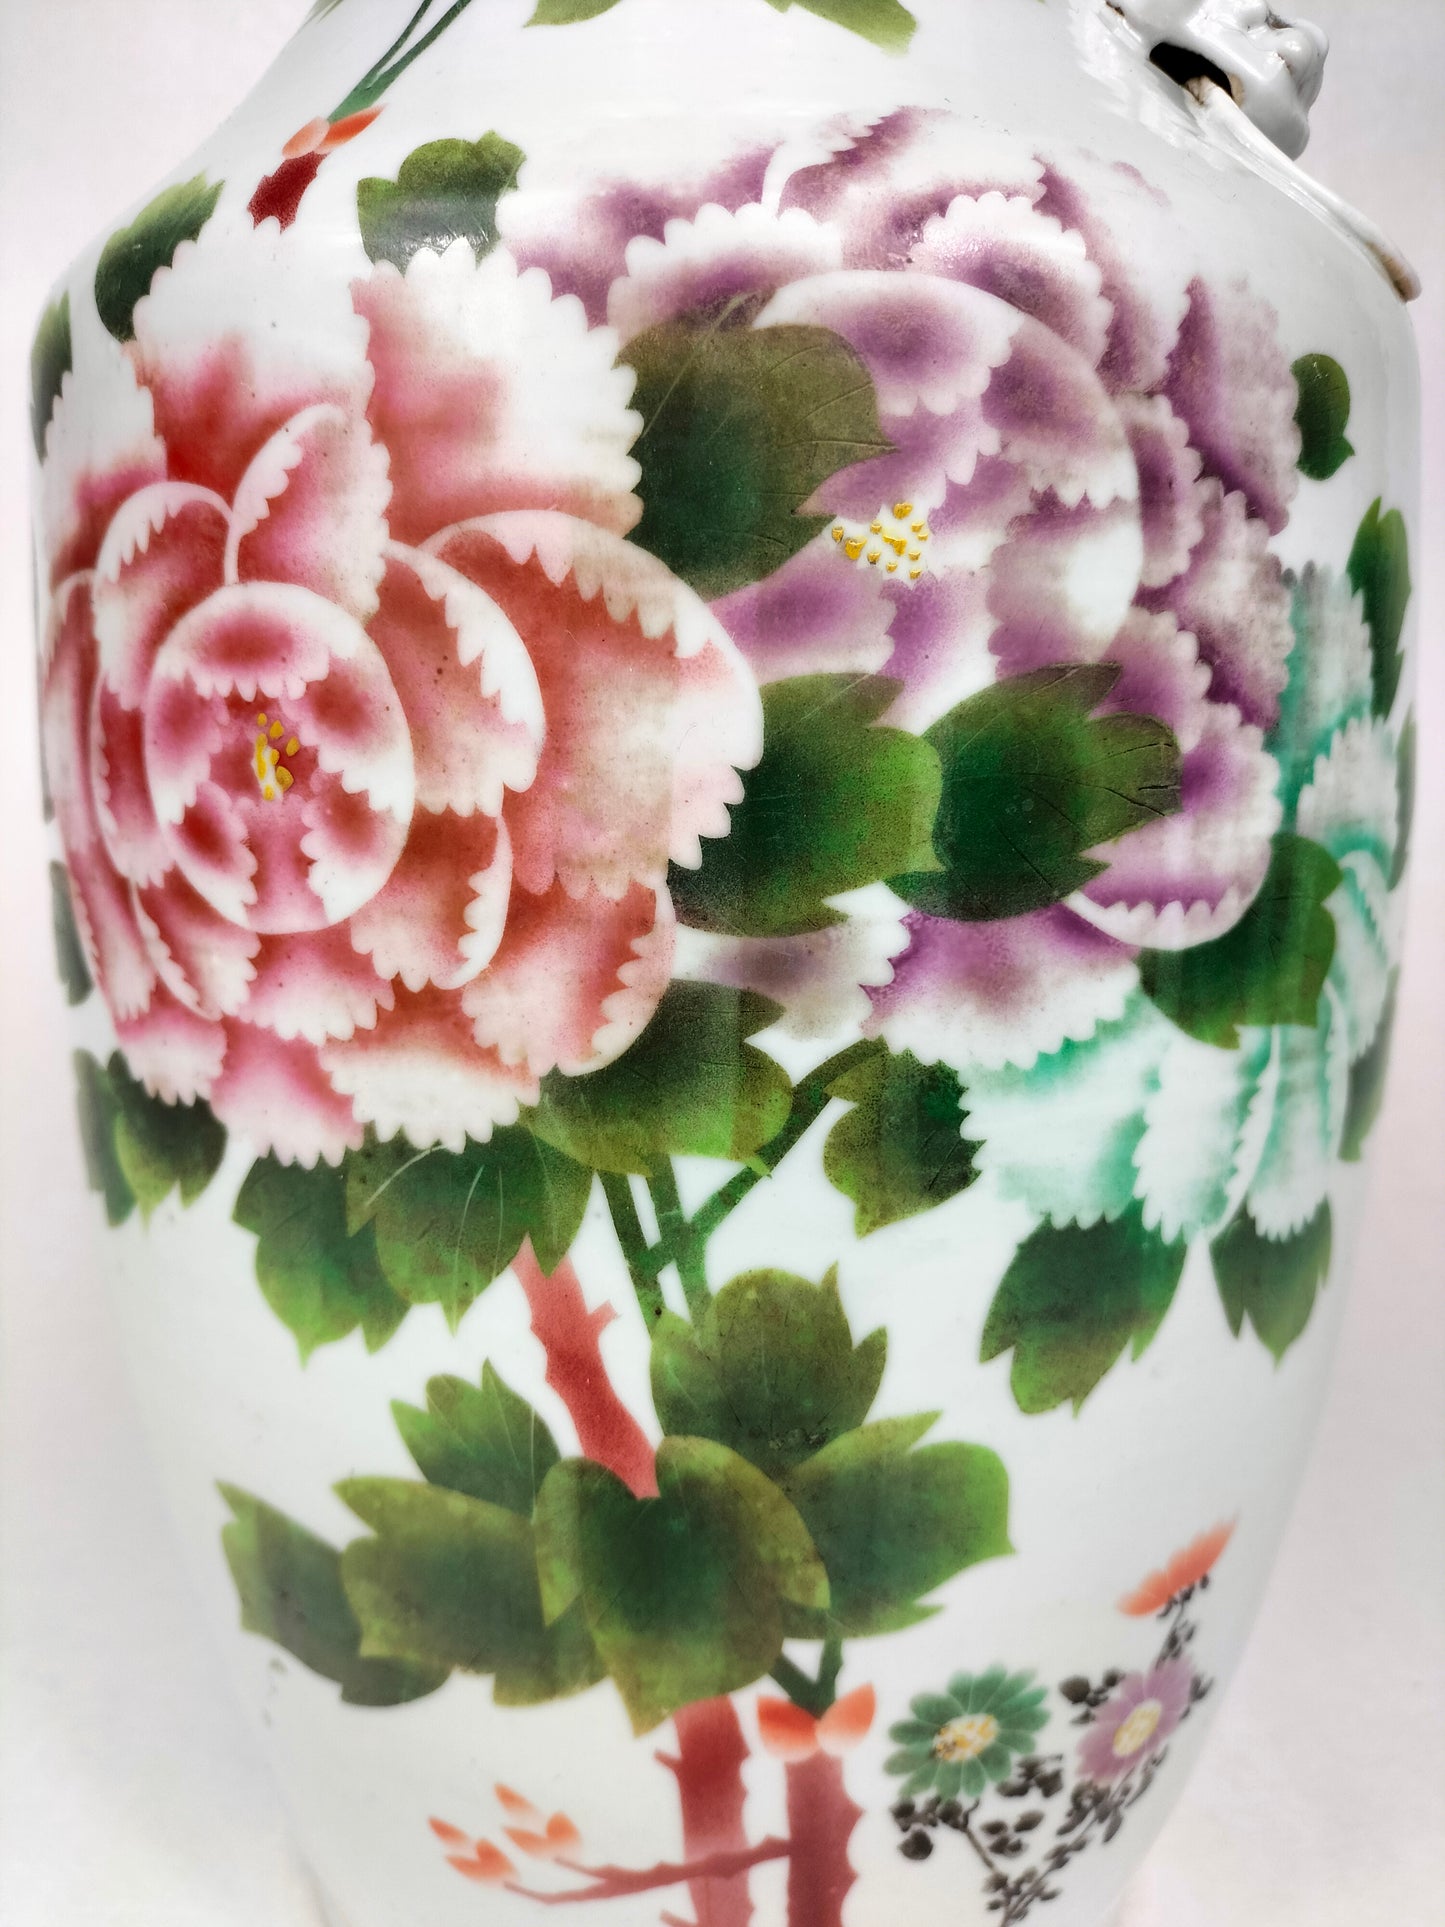 Antique Chinese vase decorated with peonies // Republic Period (1912-1949)